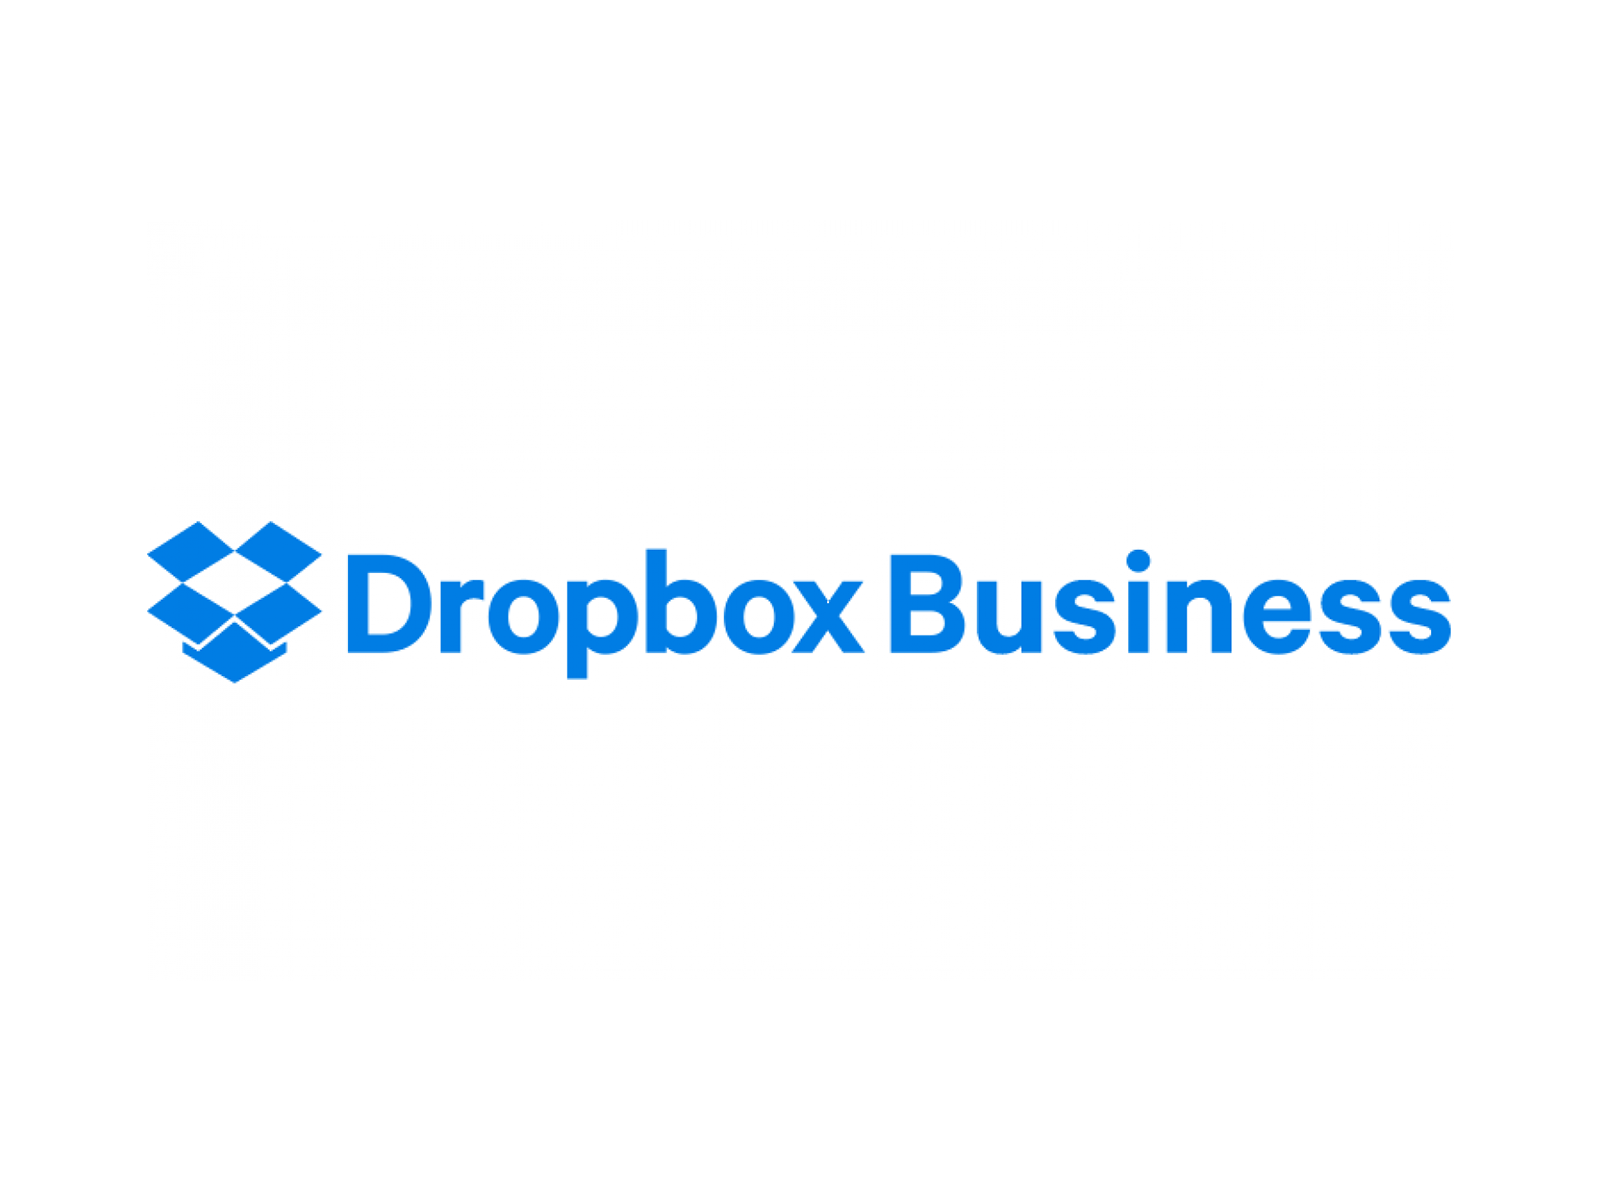 Dropbox as a service - Communication & Collaboration